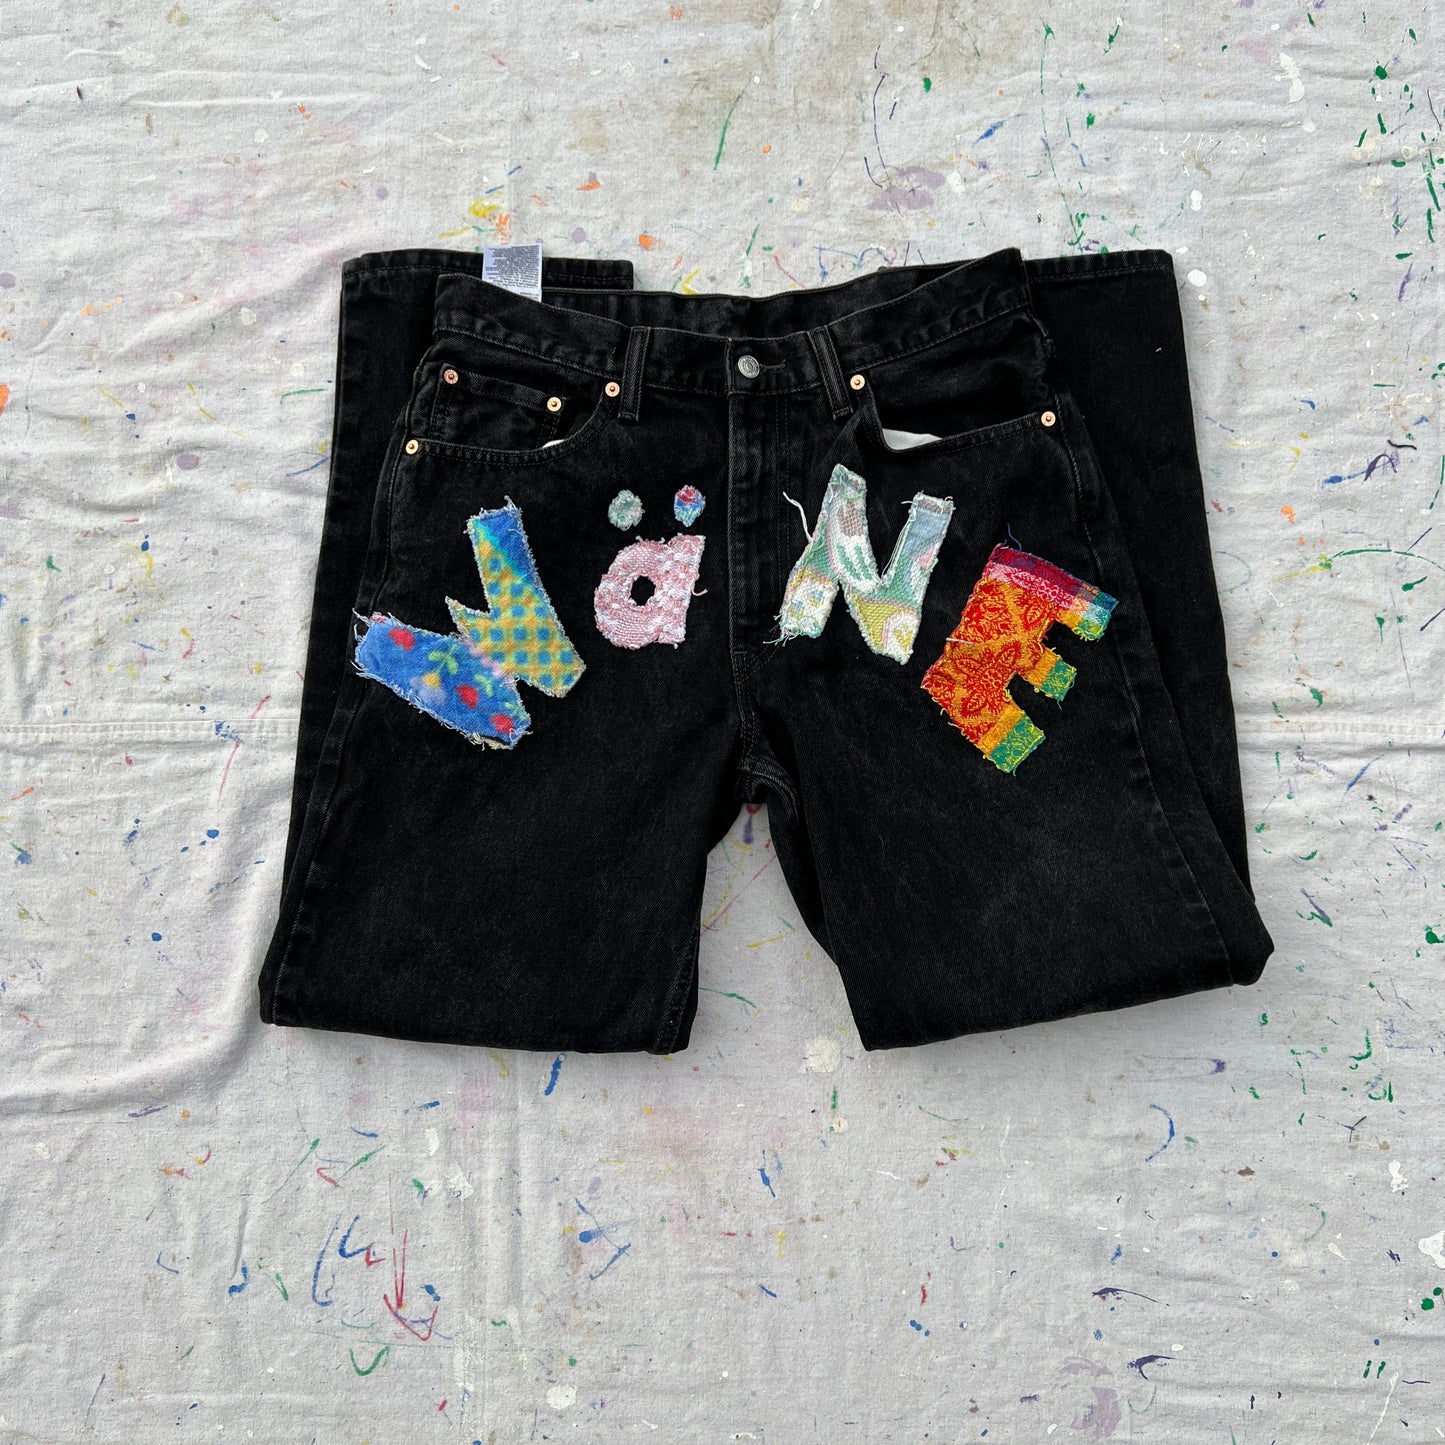 Wäne Wear Jeans (Multicolor/Black)- 34/32